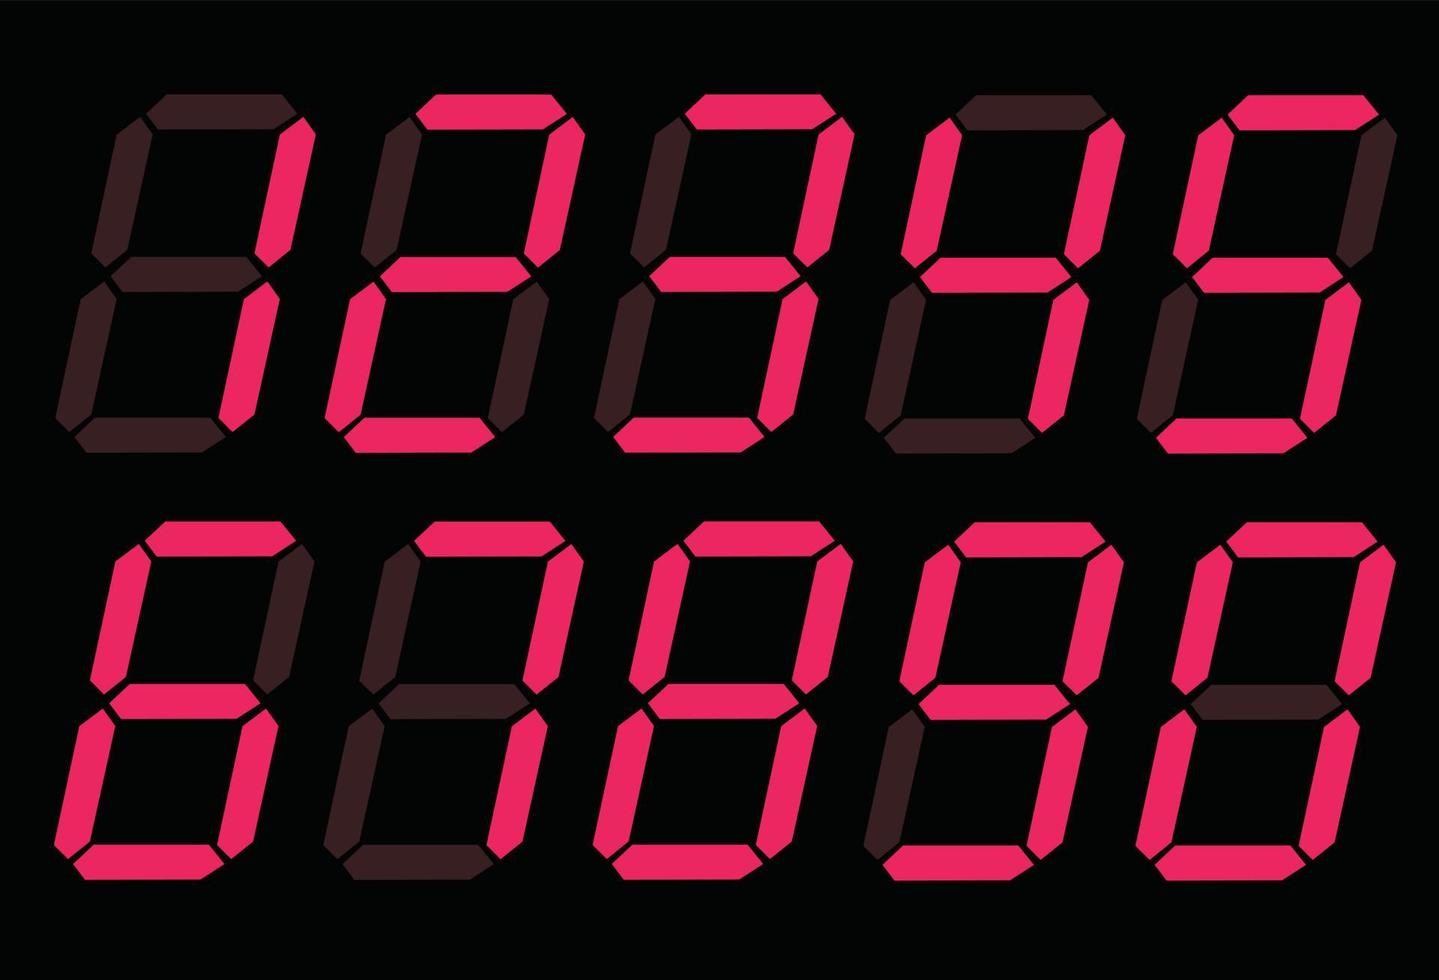 rode digitale nummers 0 - 9. symbool voor digitale nummers. led stijl digitale klok nummers teken. vector